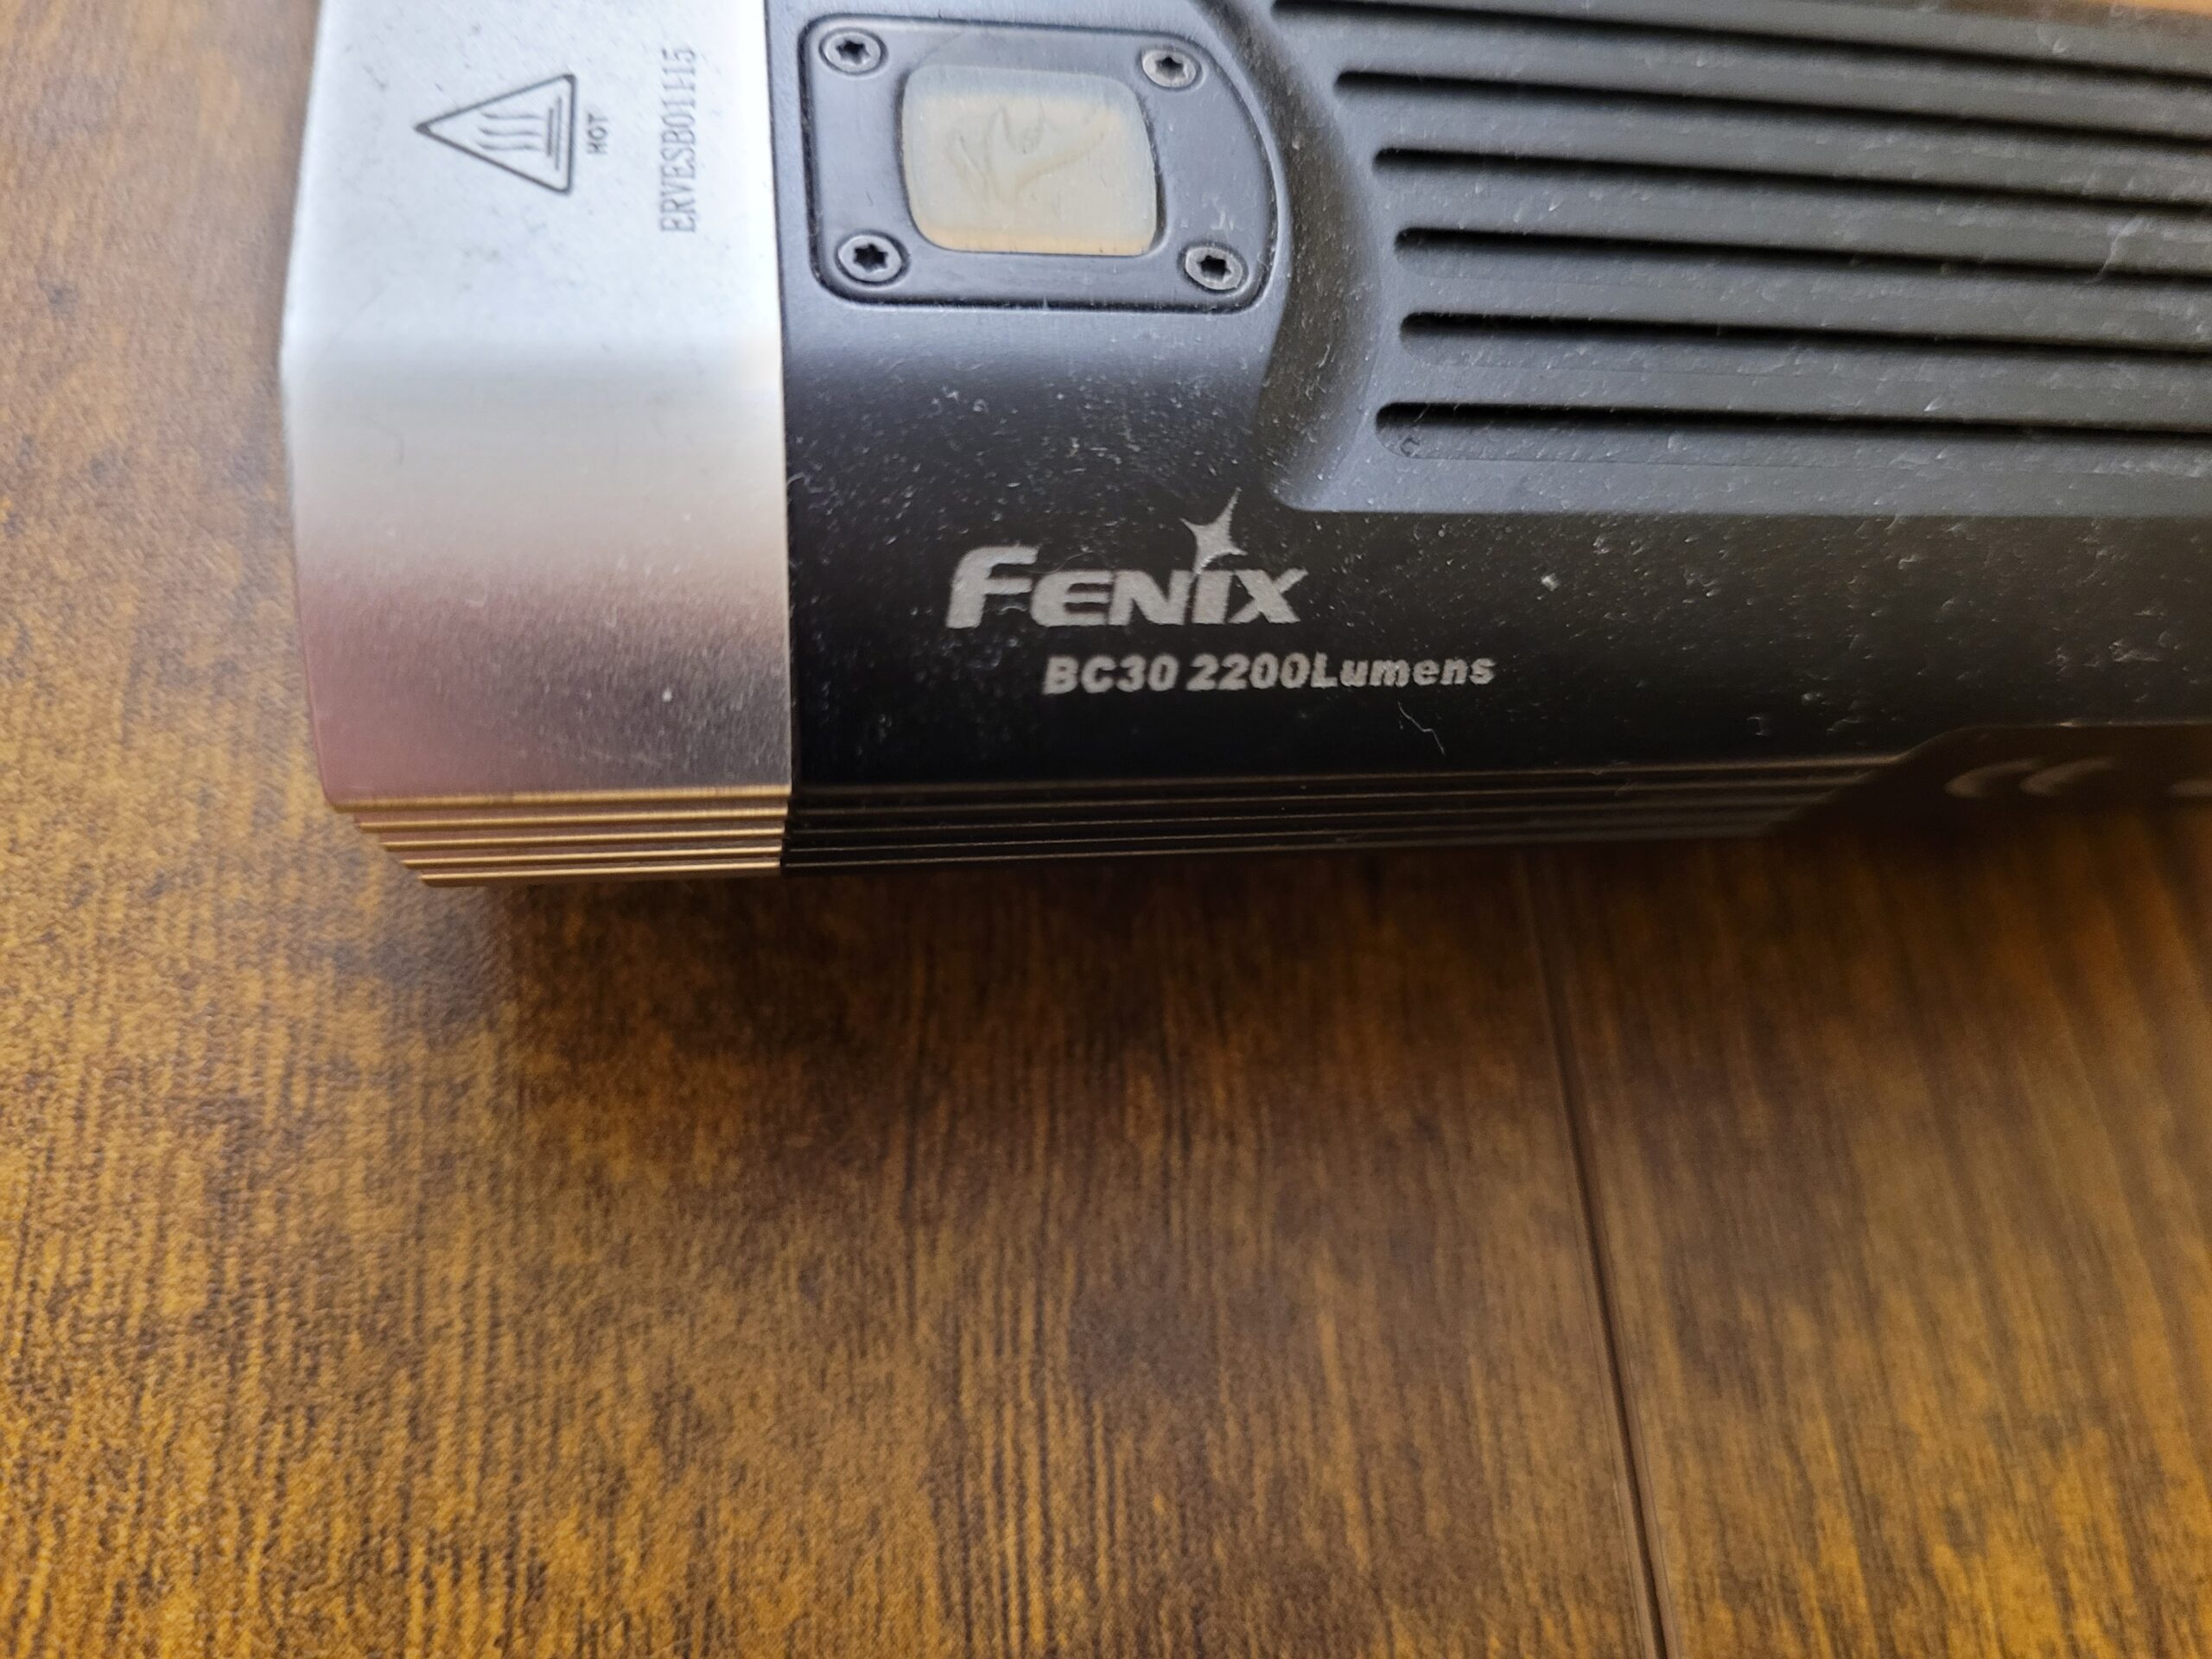 Fenix BC30 V2 Bike Light - Swappable Batteries (18650 Style)